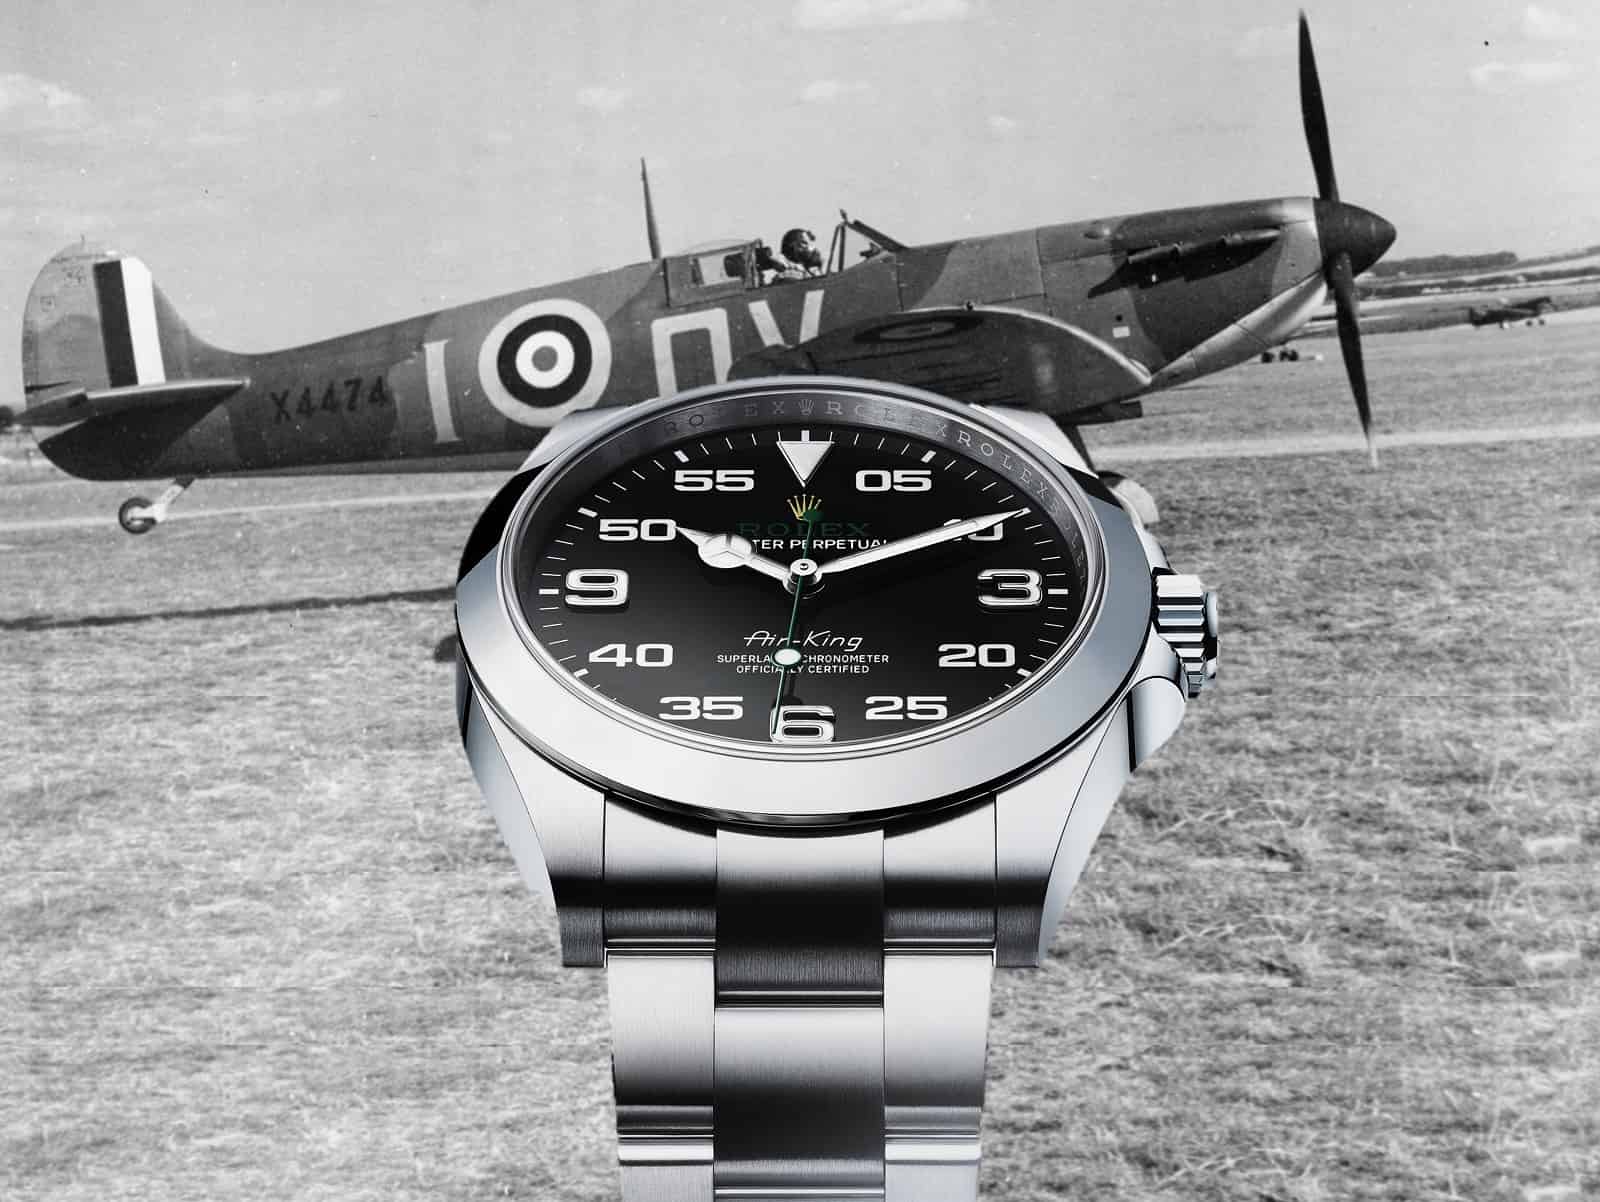 Royal Air Force Flugzeug mit Rolex Air-King Uhr